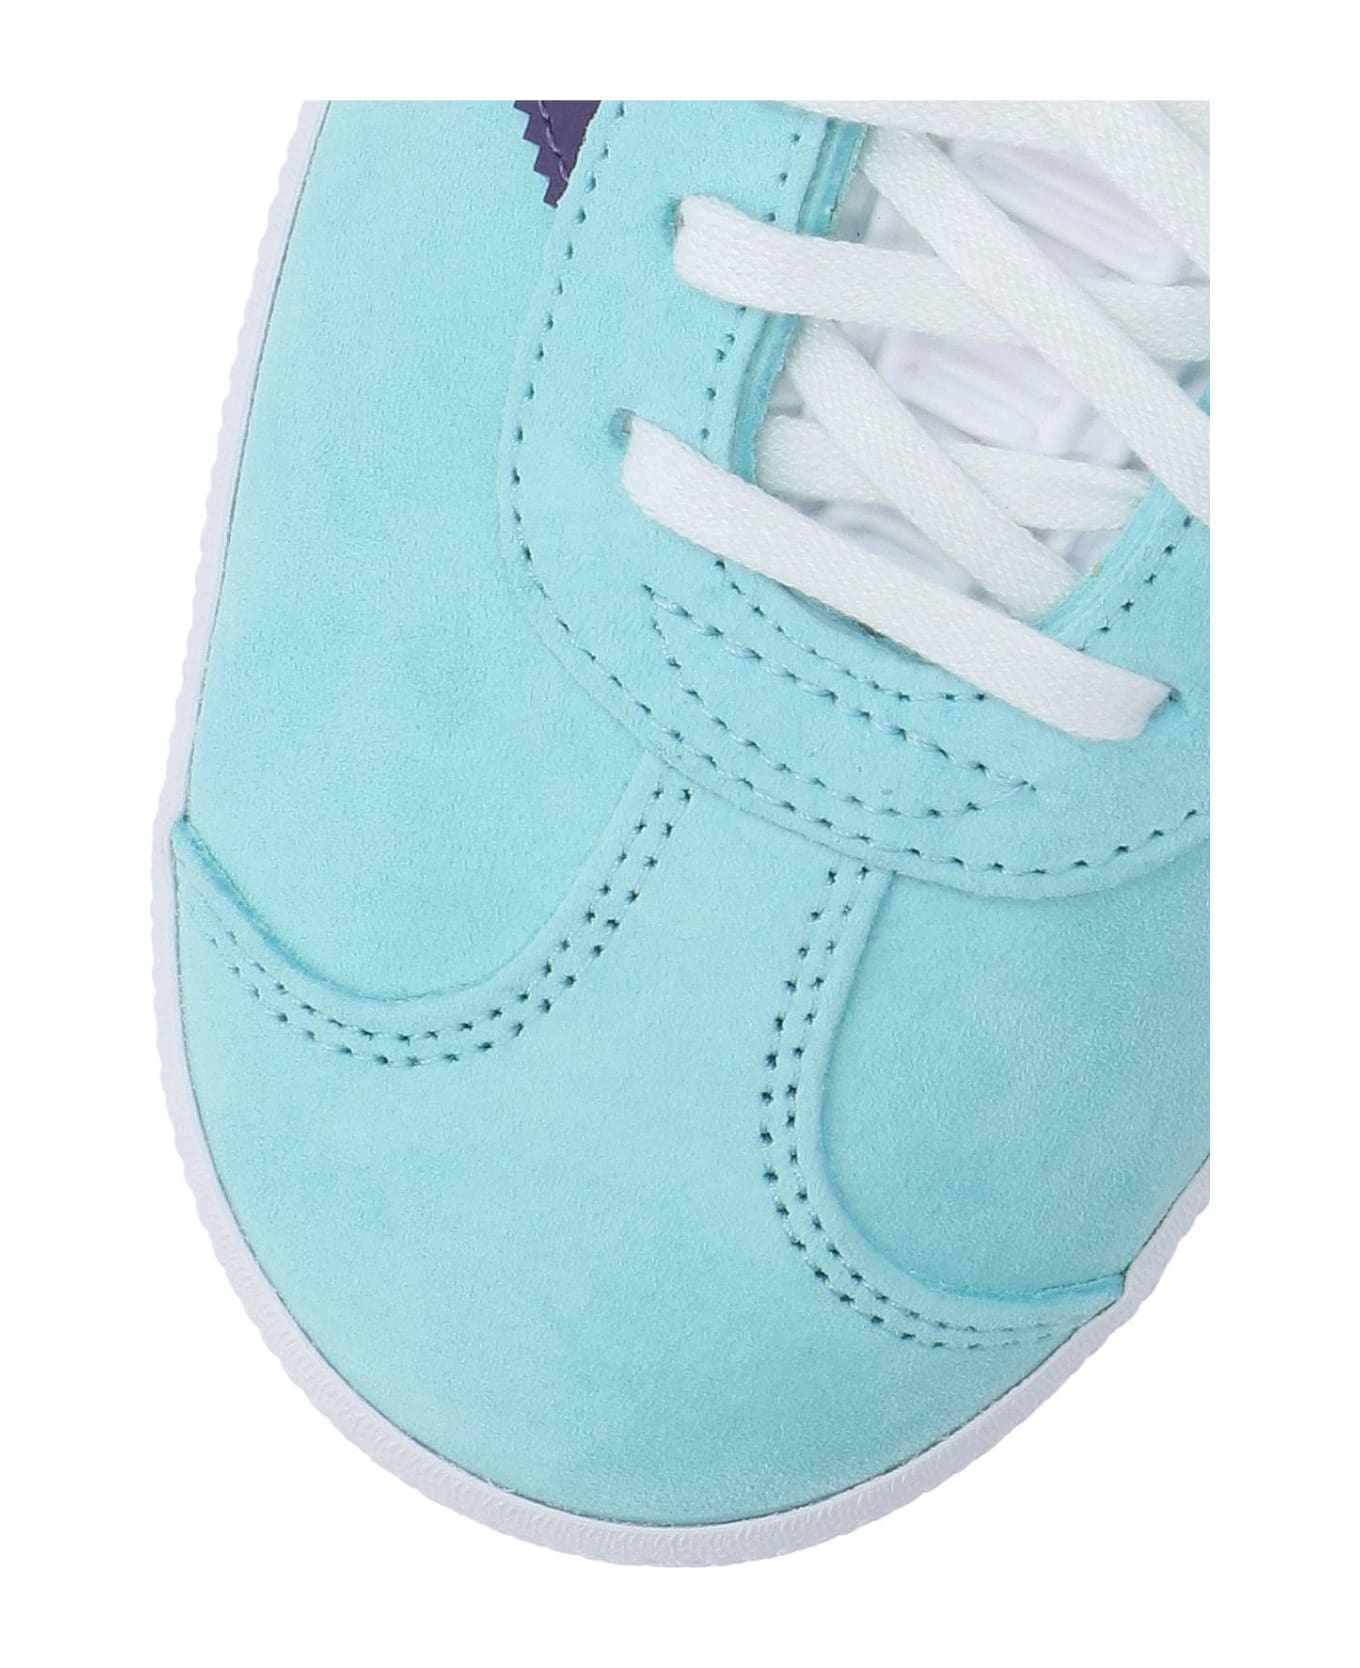 Adidas Originals 'gazelle' Sneakers - Light Blue